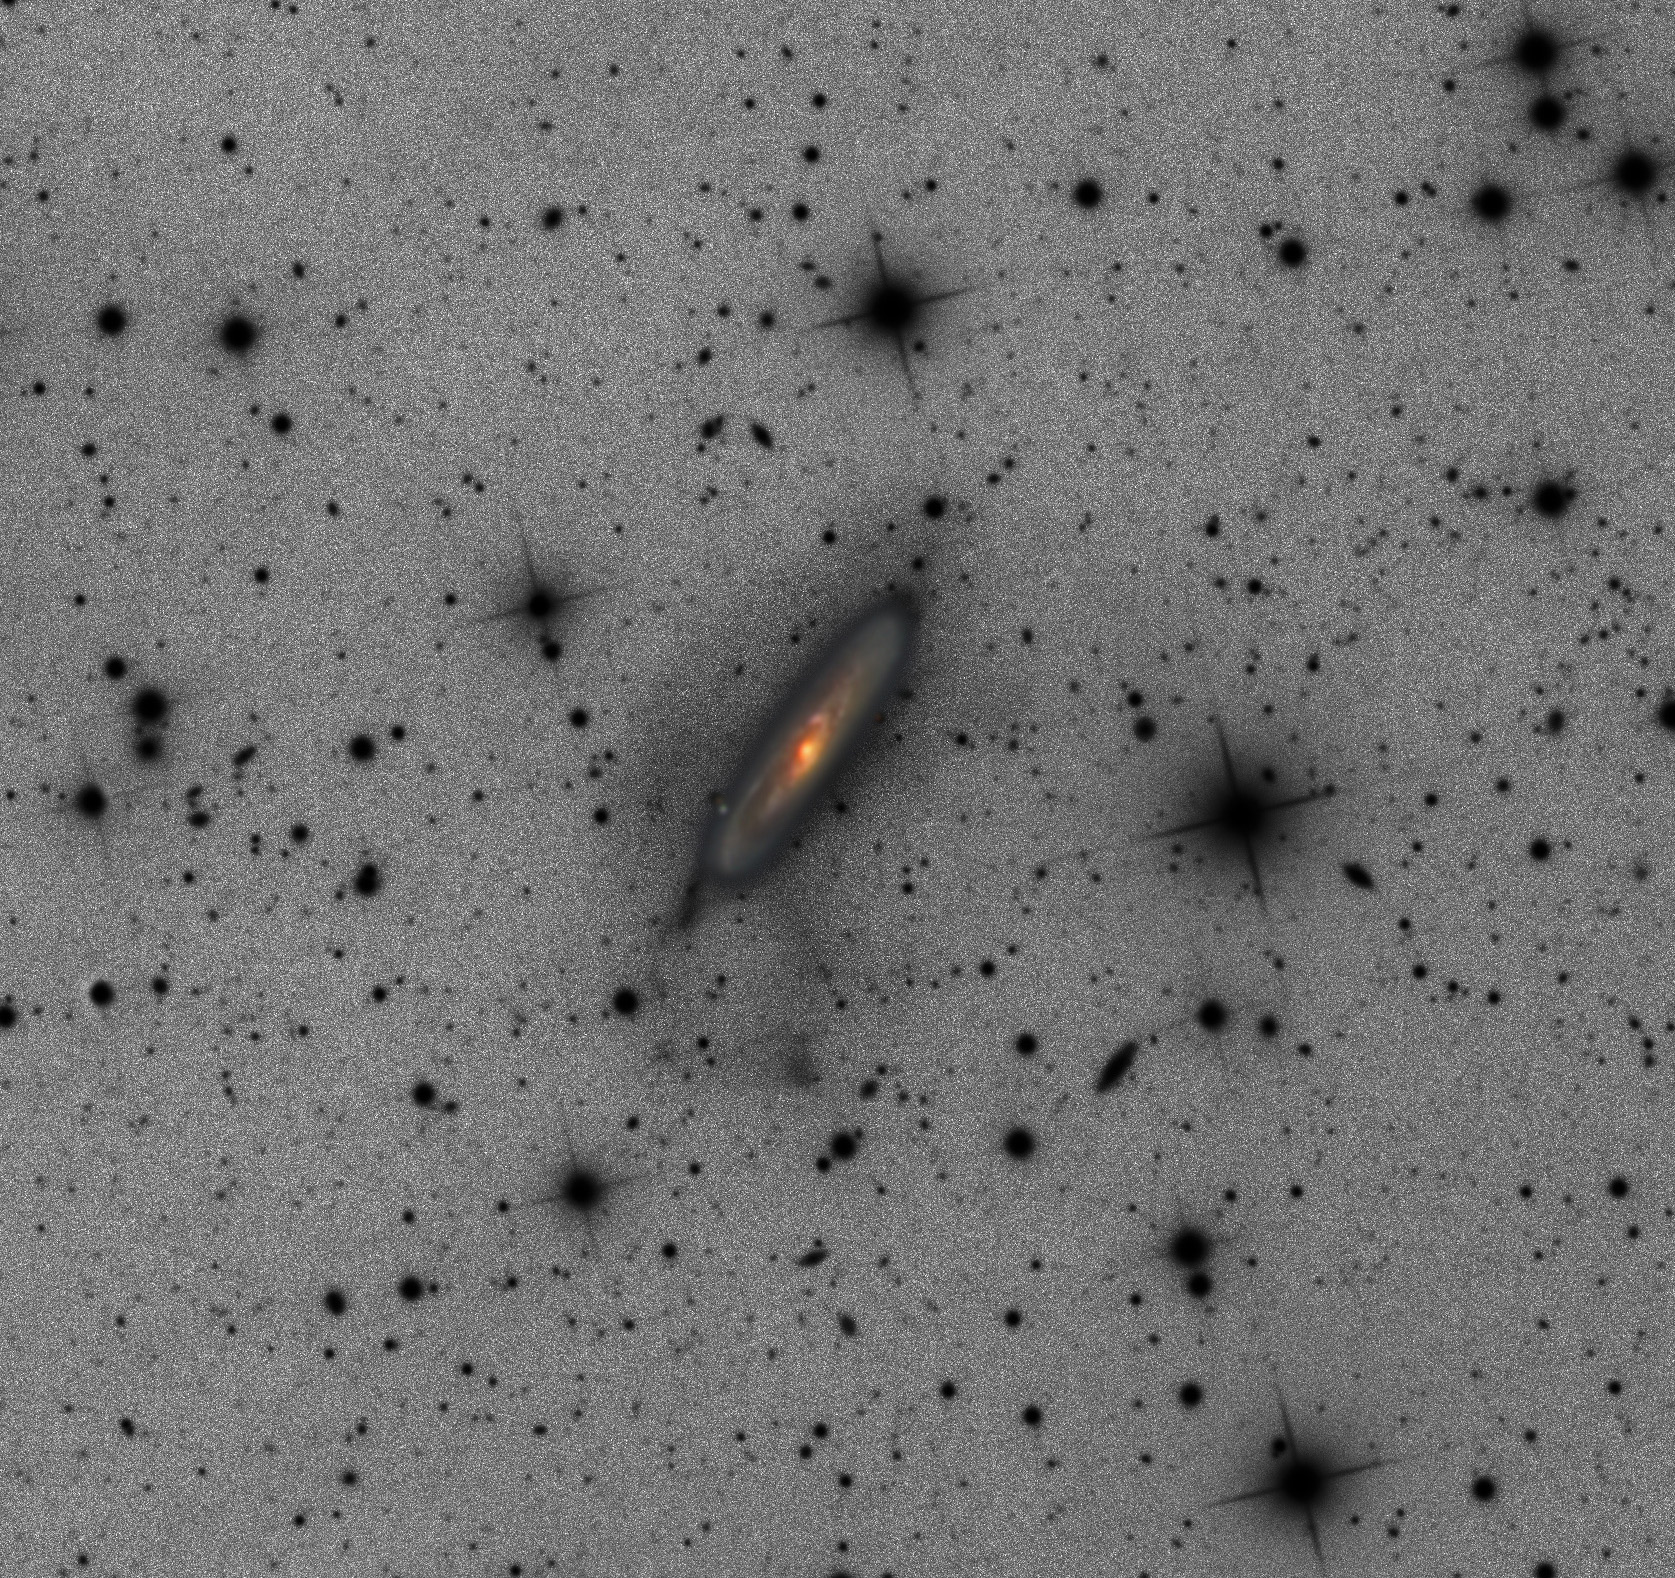 NGC259invColorcrop.jpg